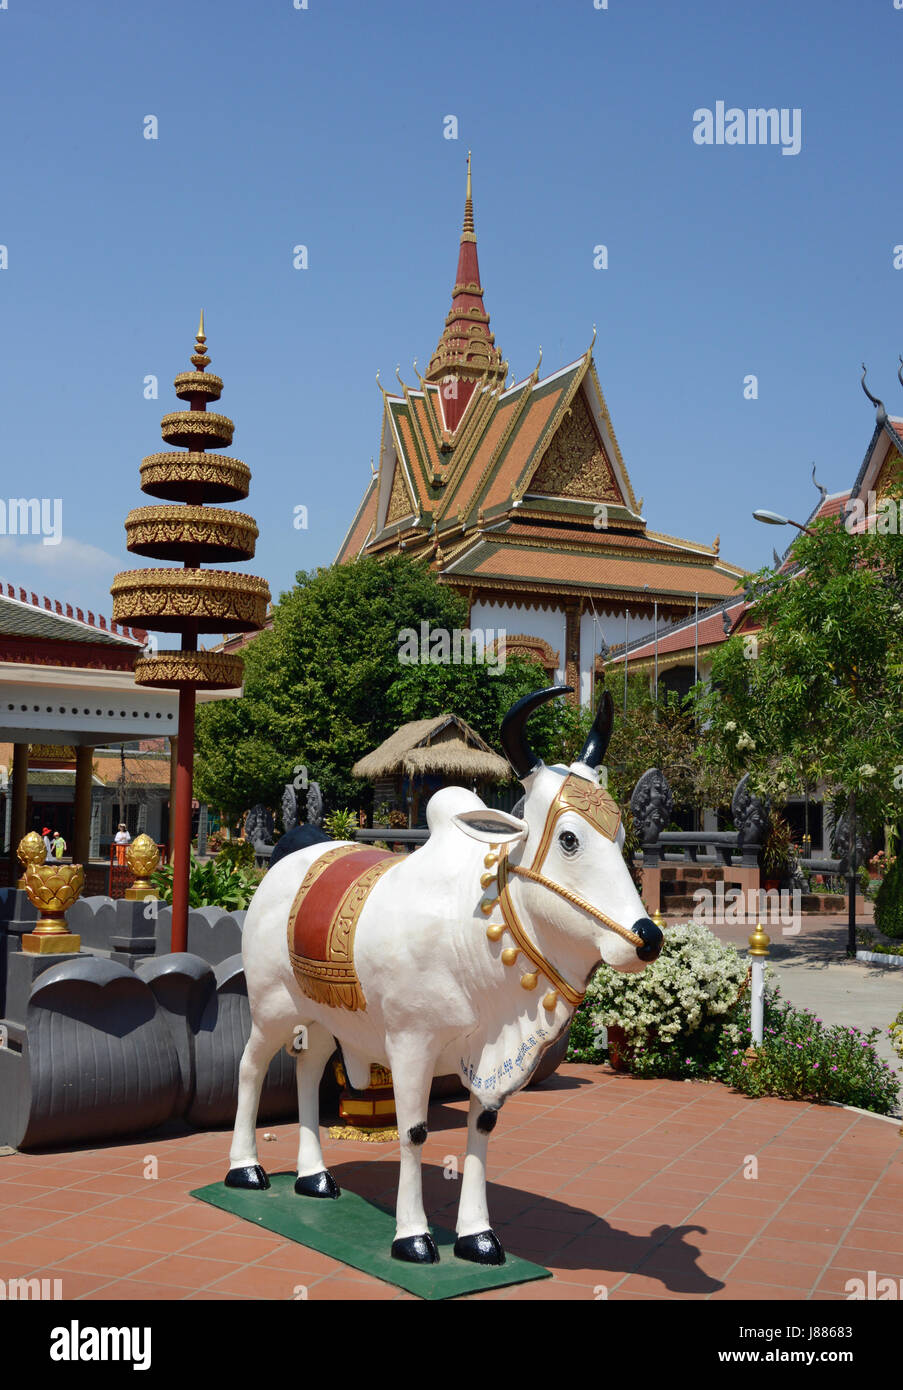 Scene at Wat Preah Prom Rath temple, Siem Reap, Cambodia Stock Photo